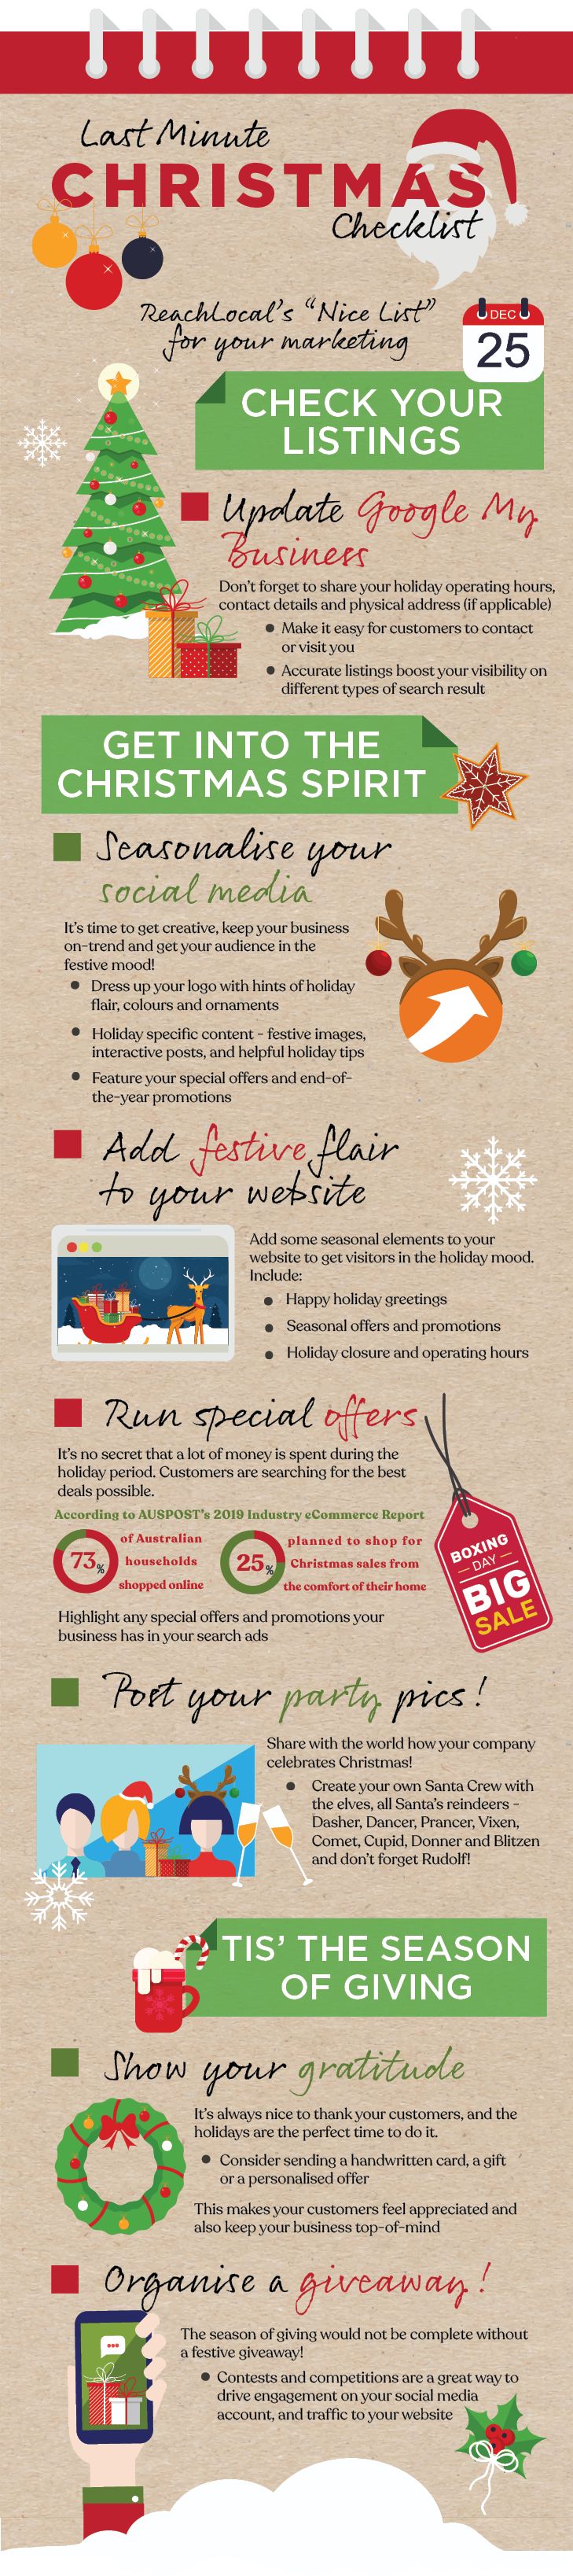 Last Minute Christmas Marketing Checklist